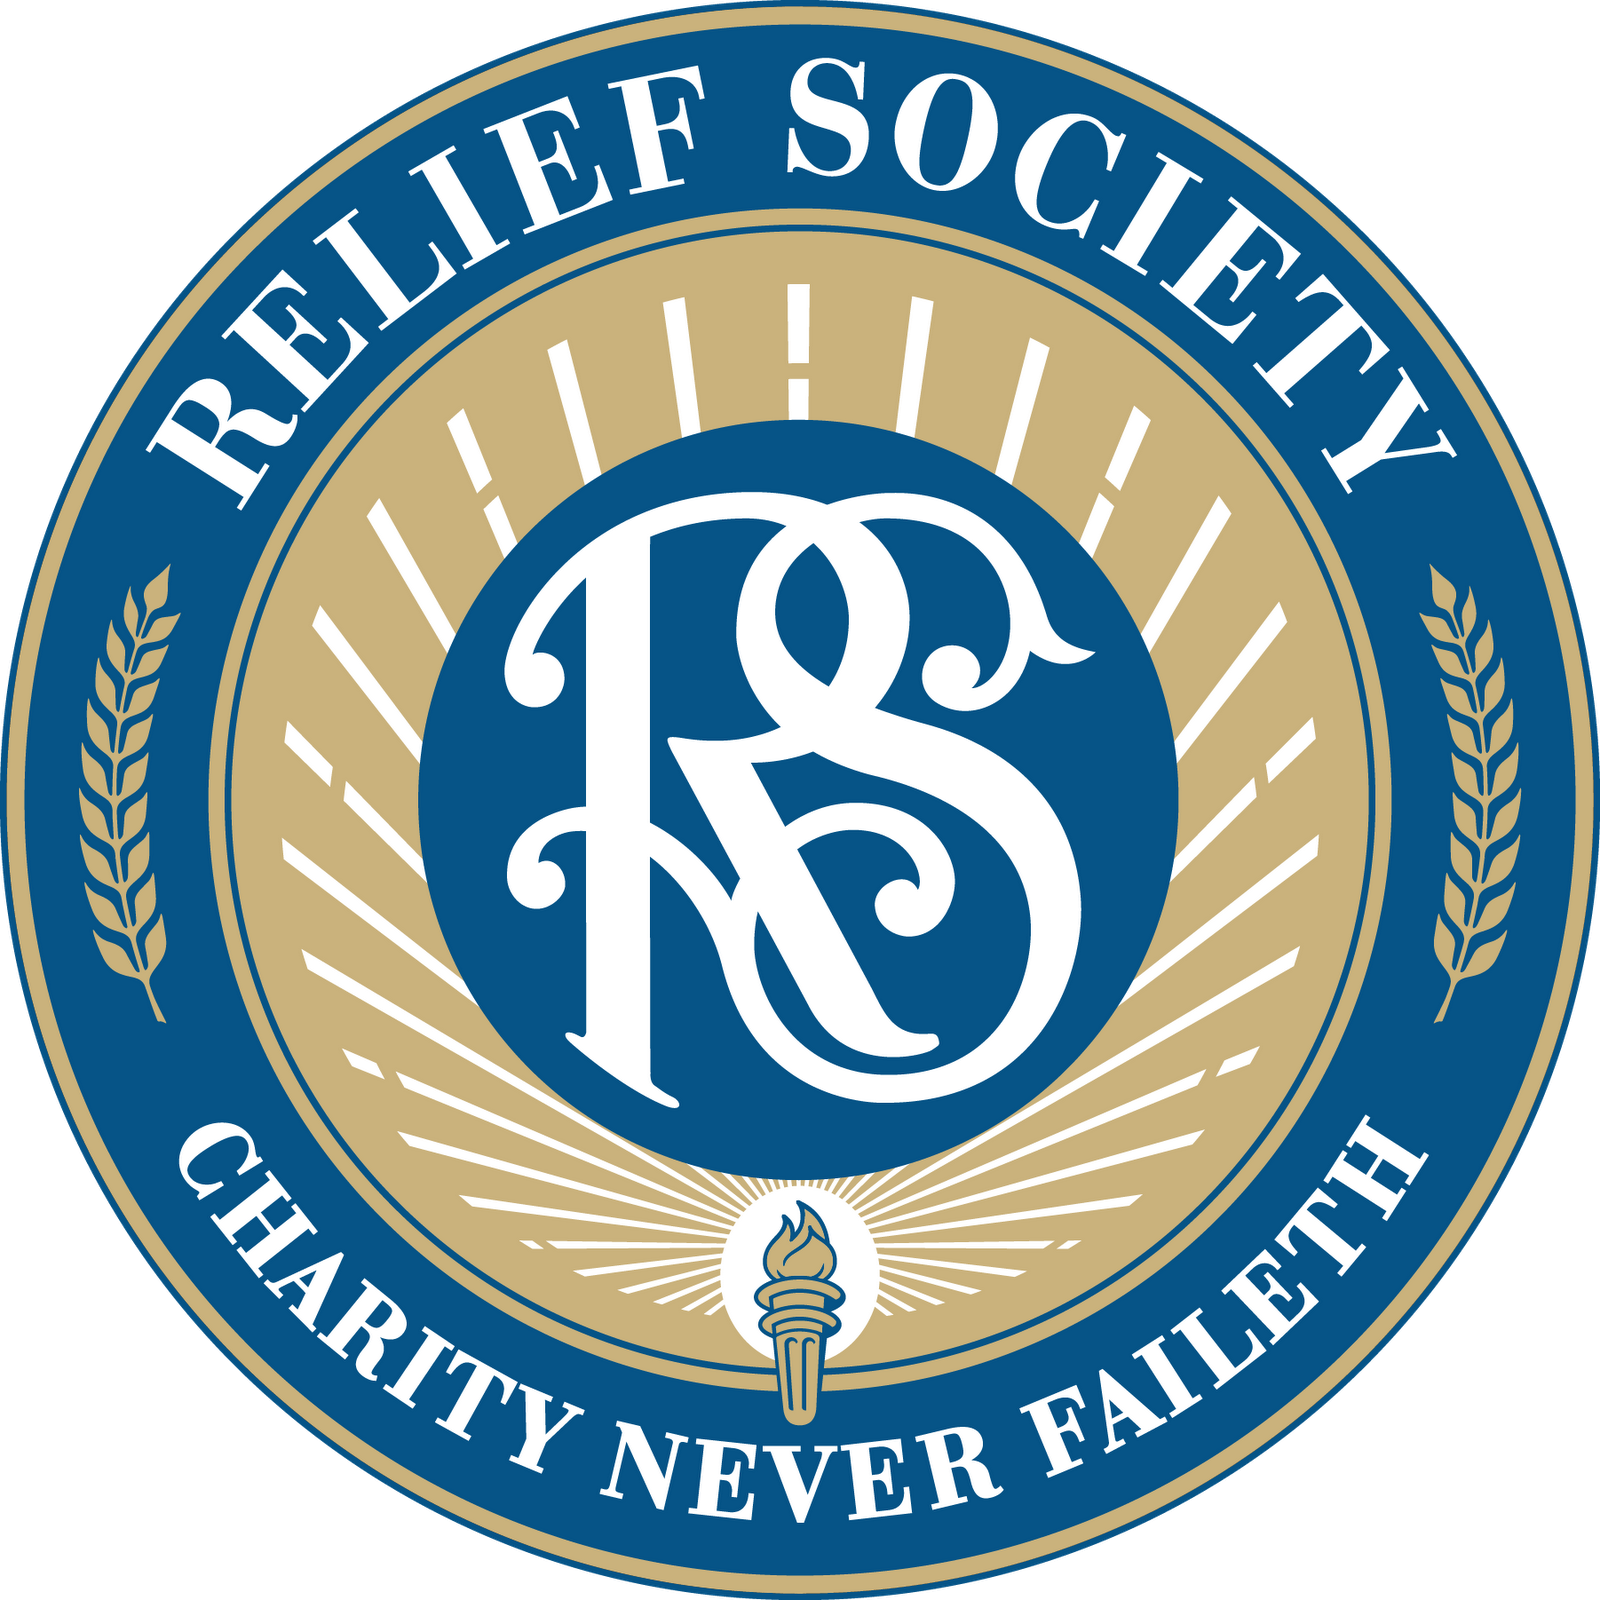 Relief Society Motto